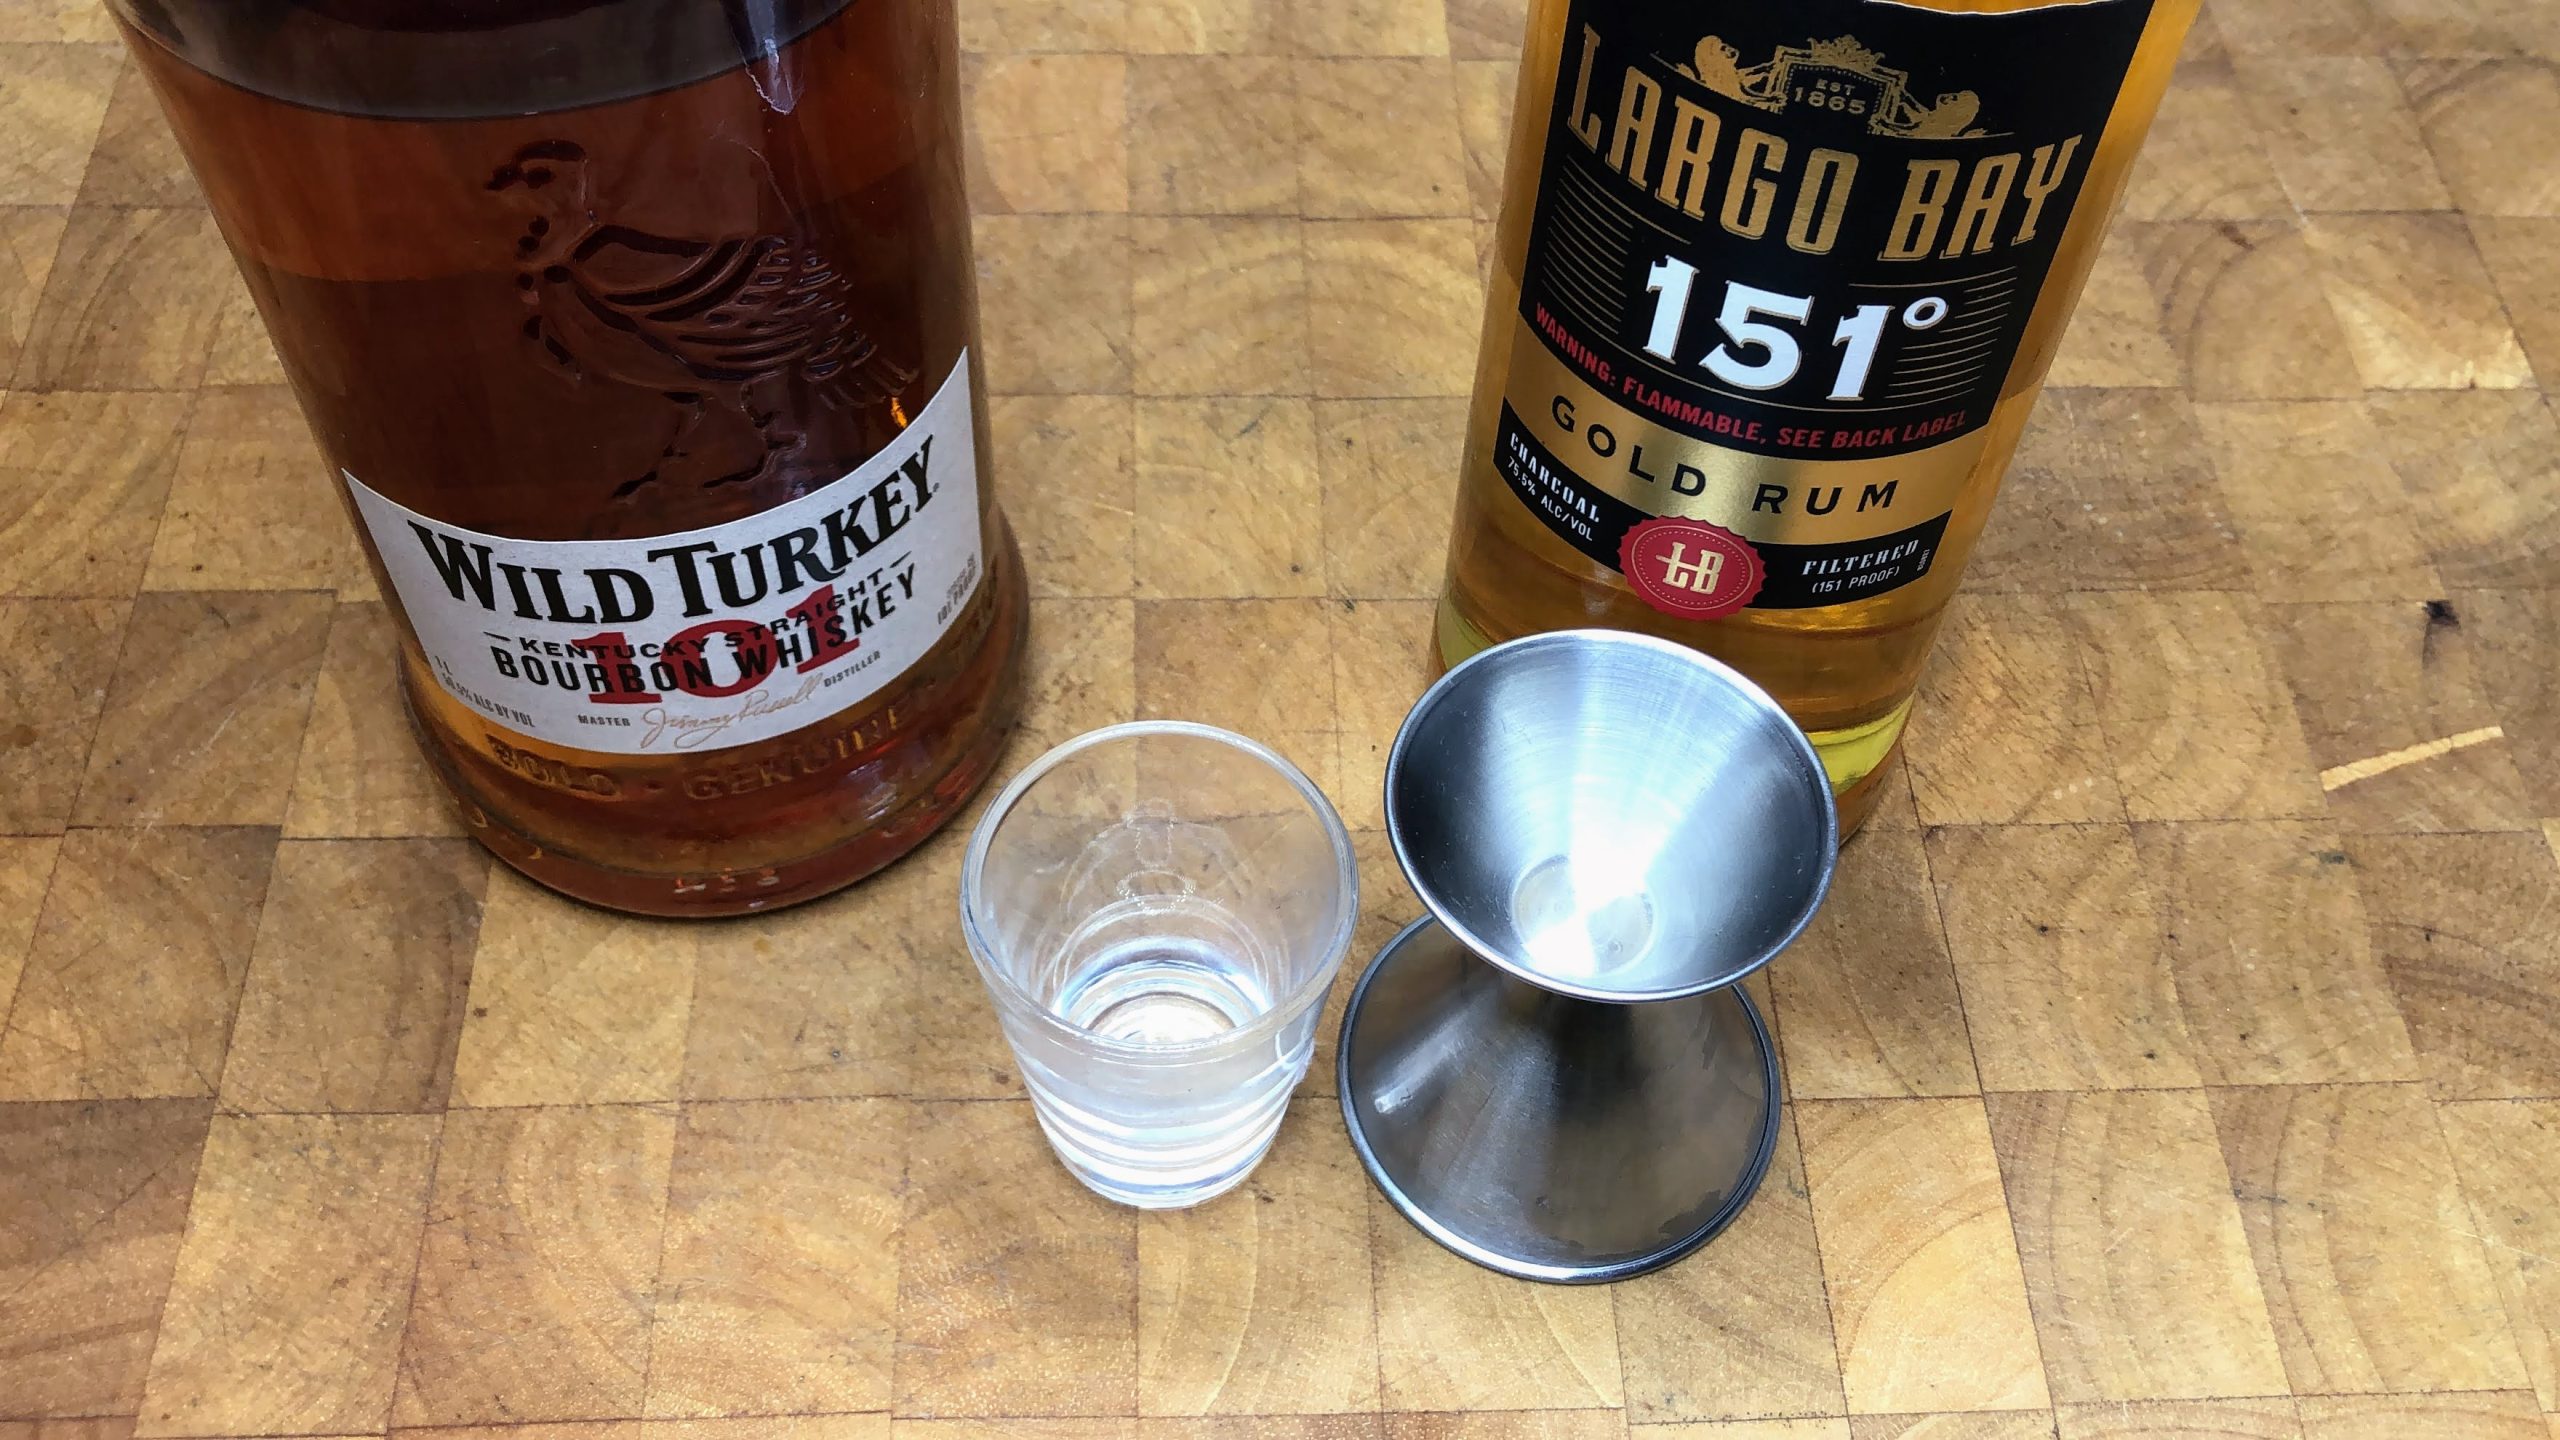 Empty shot glass next to a jigger, 151 rum and wild turkey.